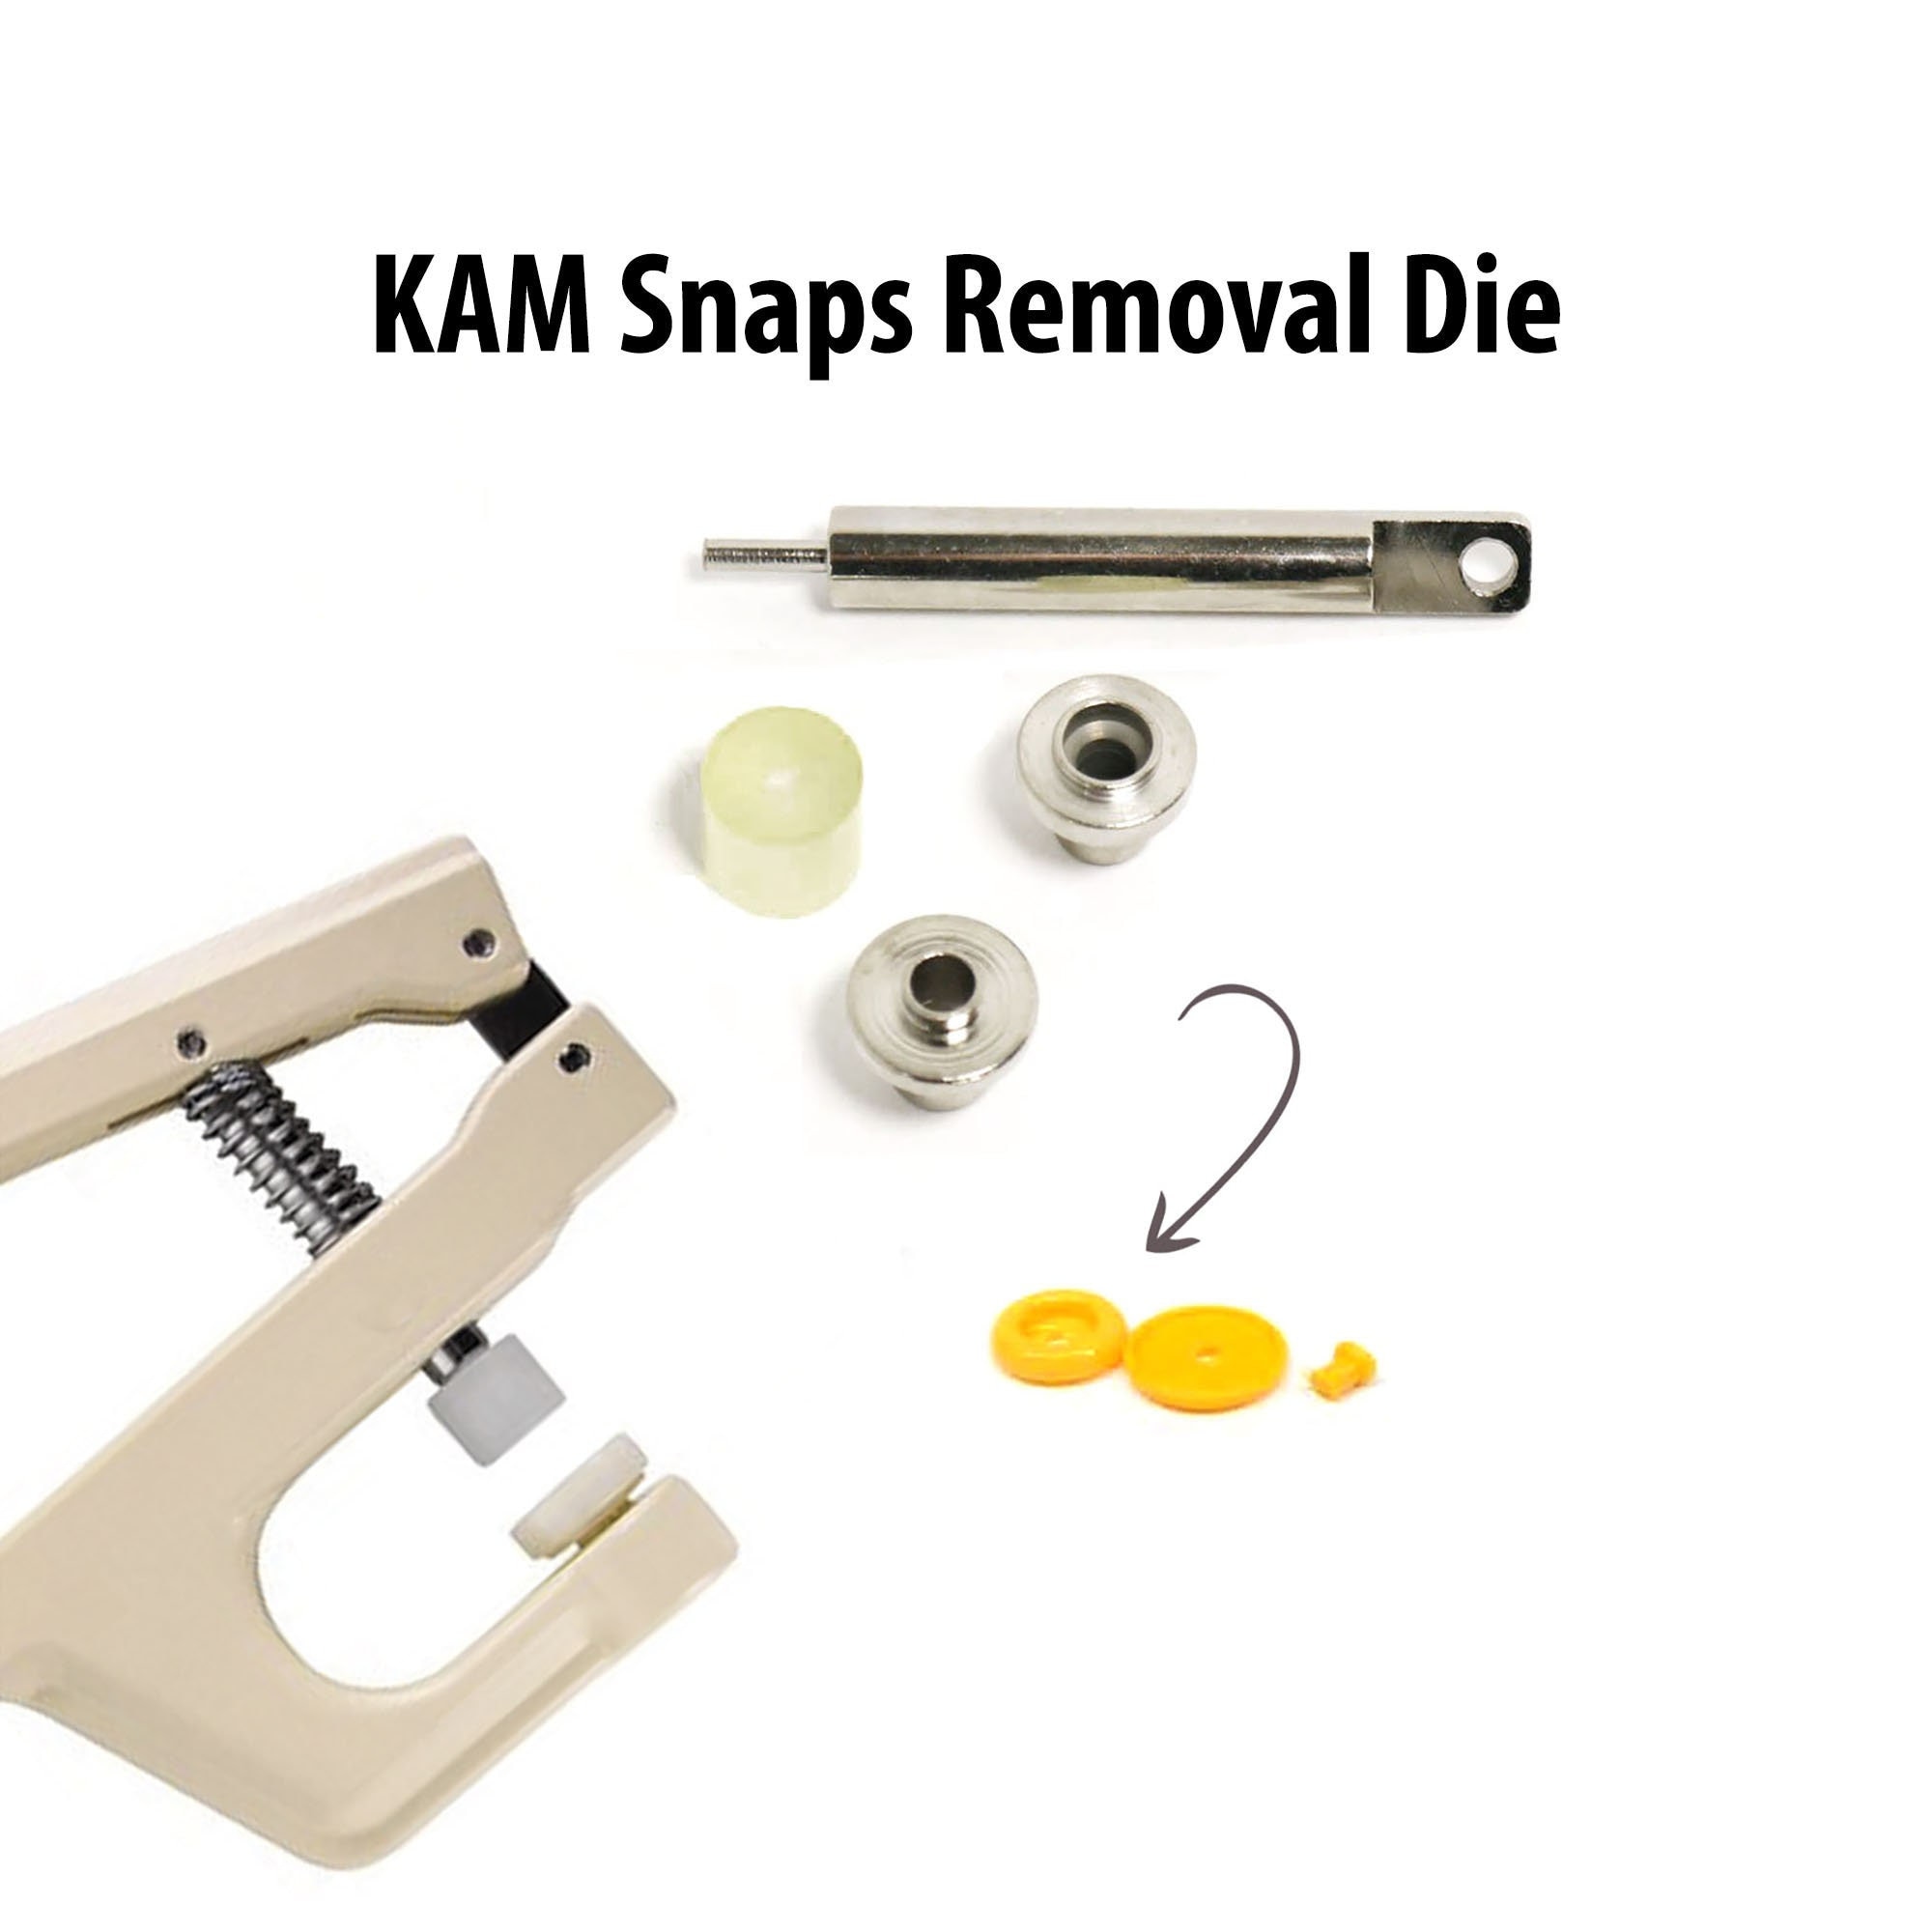 KAM Plastic Snap Dies for Professional Kam® Plastic Snaps/snap Press DK-93  us-based Company Dk 93/table Press -  Denmark